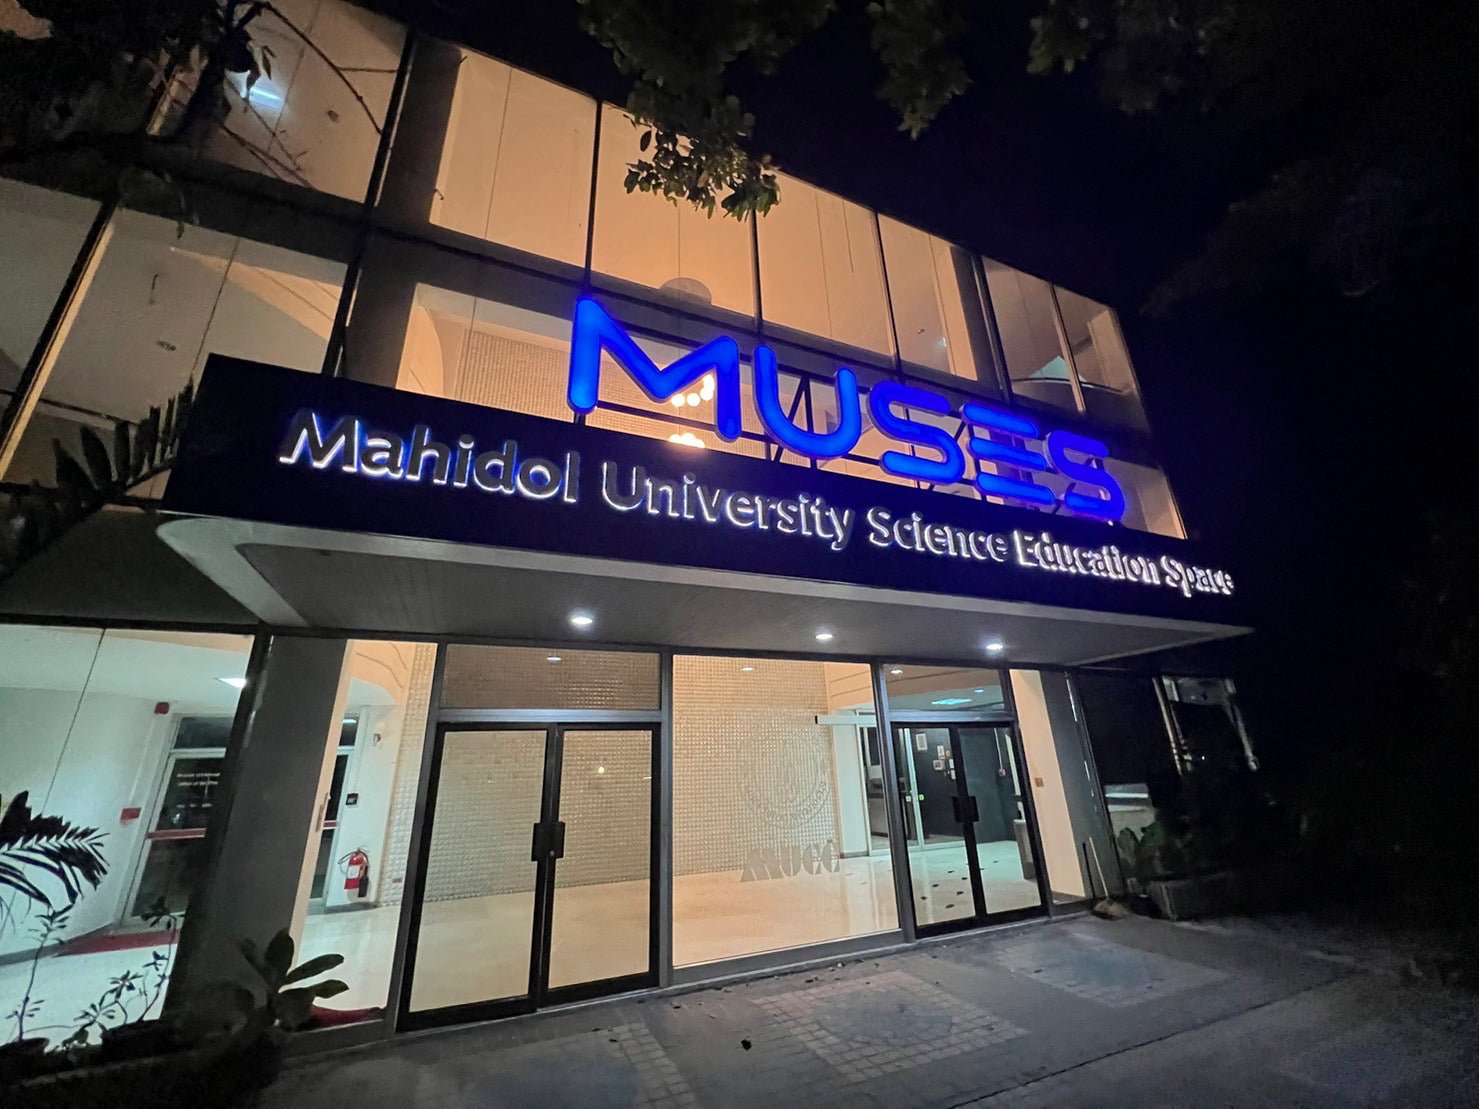 Mahidol University Science Einrathon Spame